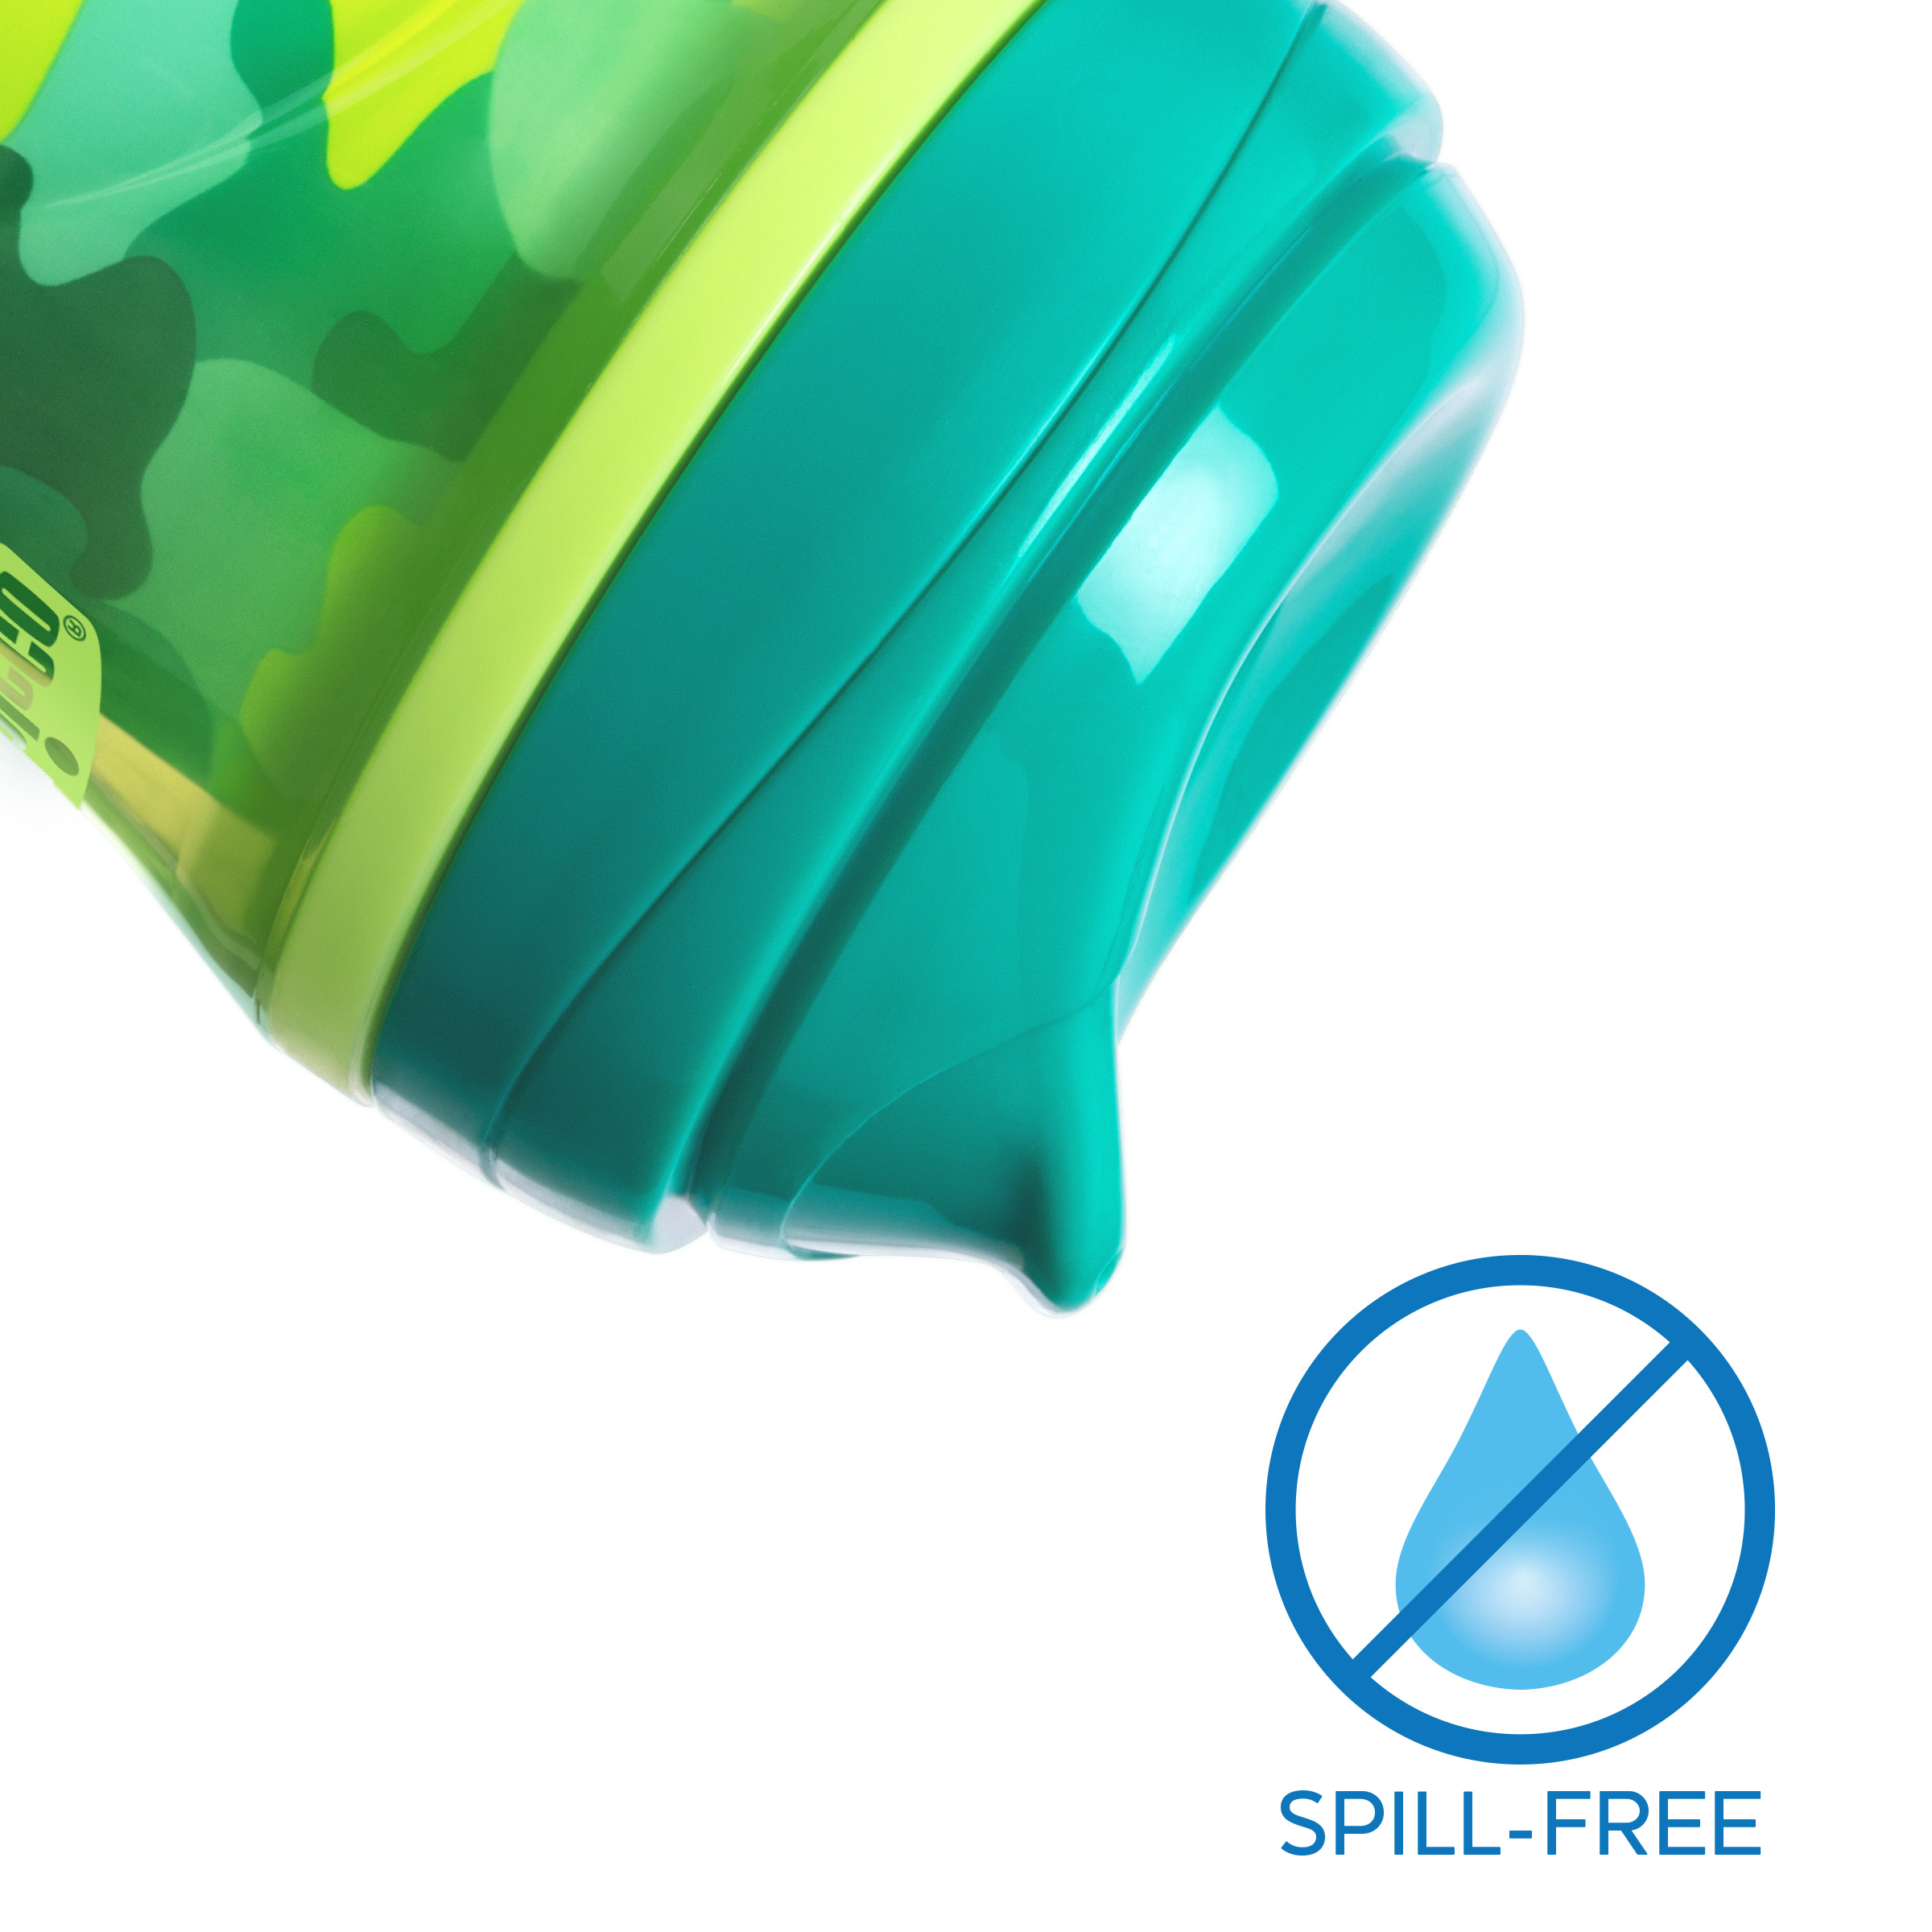 Spill-free